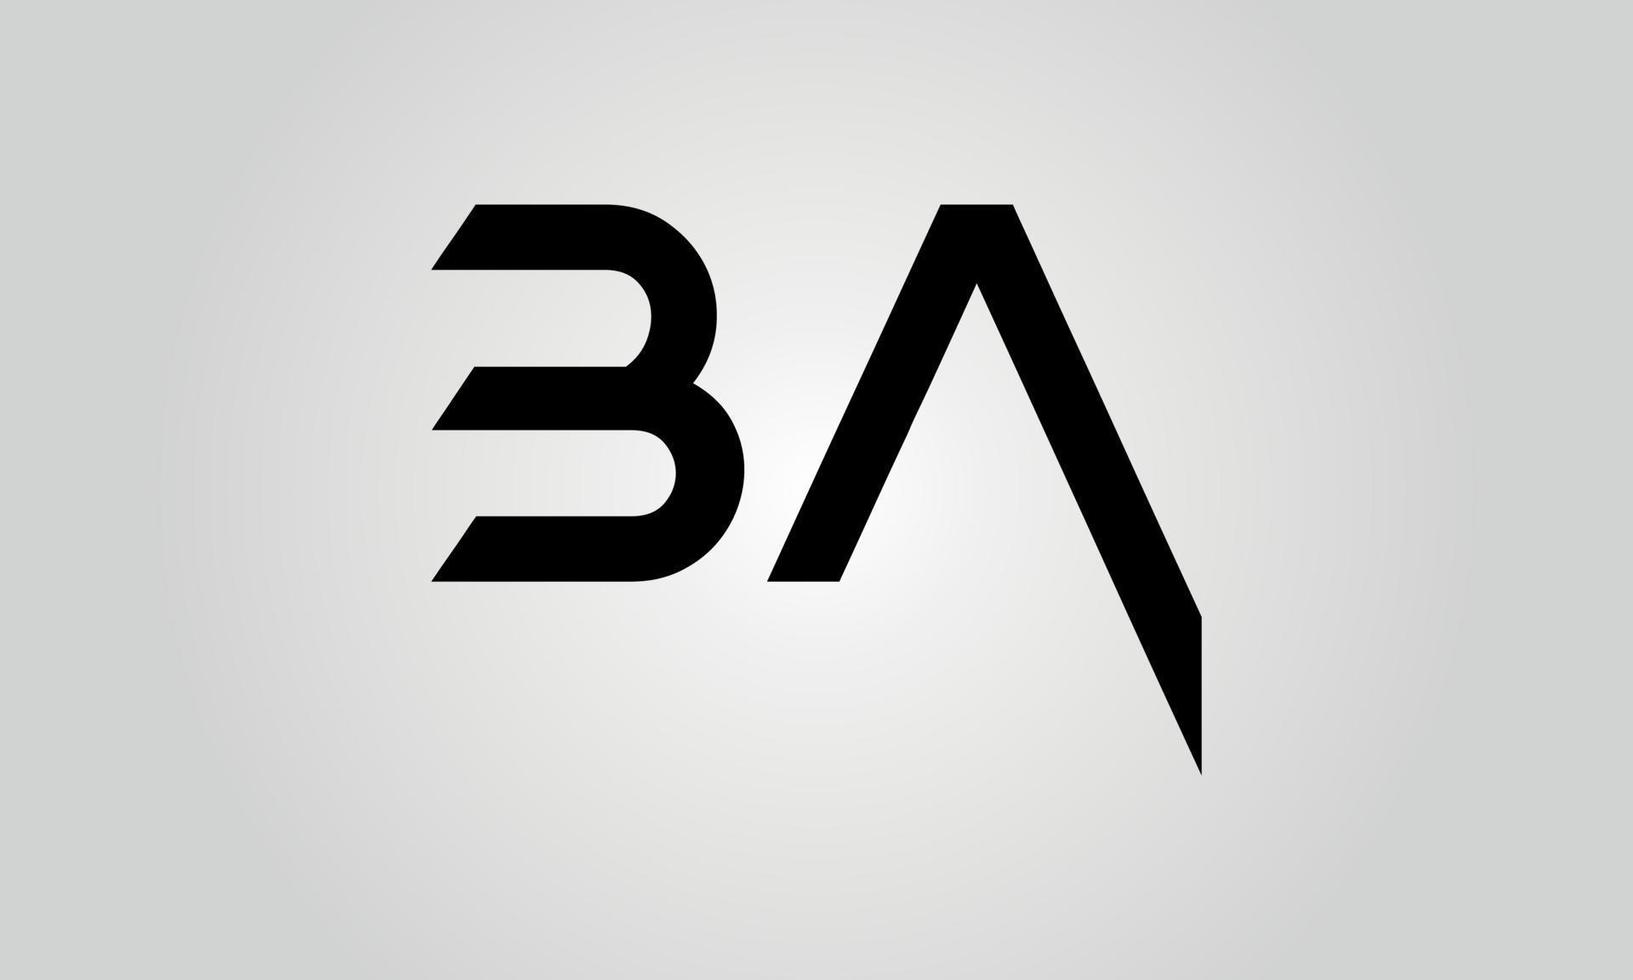 ba design de logotipo. modelo de vetor livre de design de ícone de logotipo de letra inicial ba.